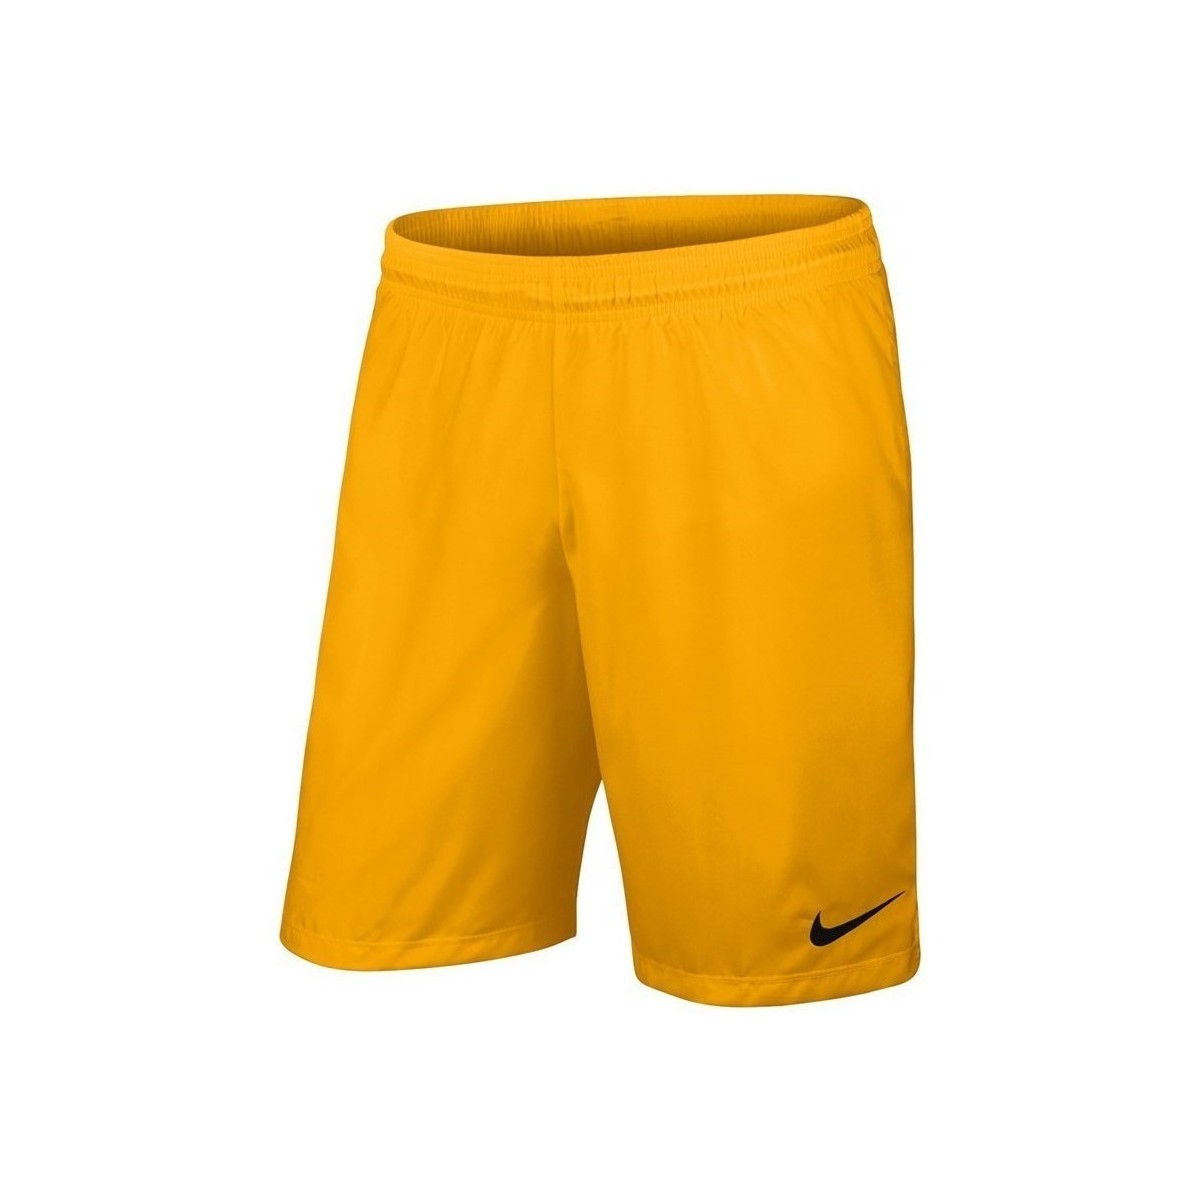 Îmbracaminte Bărbați Pantaloni trei sferturi Nike Laser Woven Iii Short NB galben